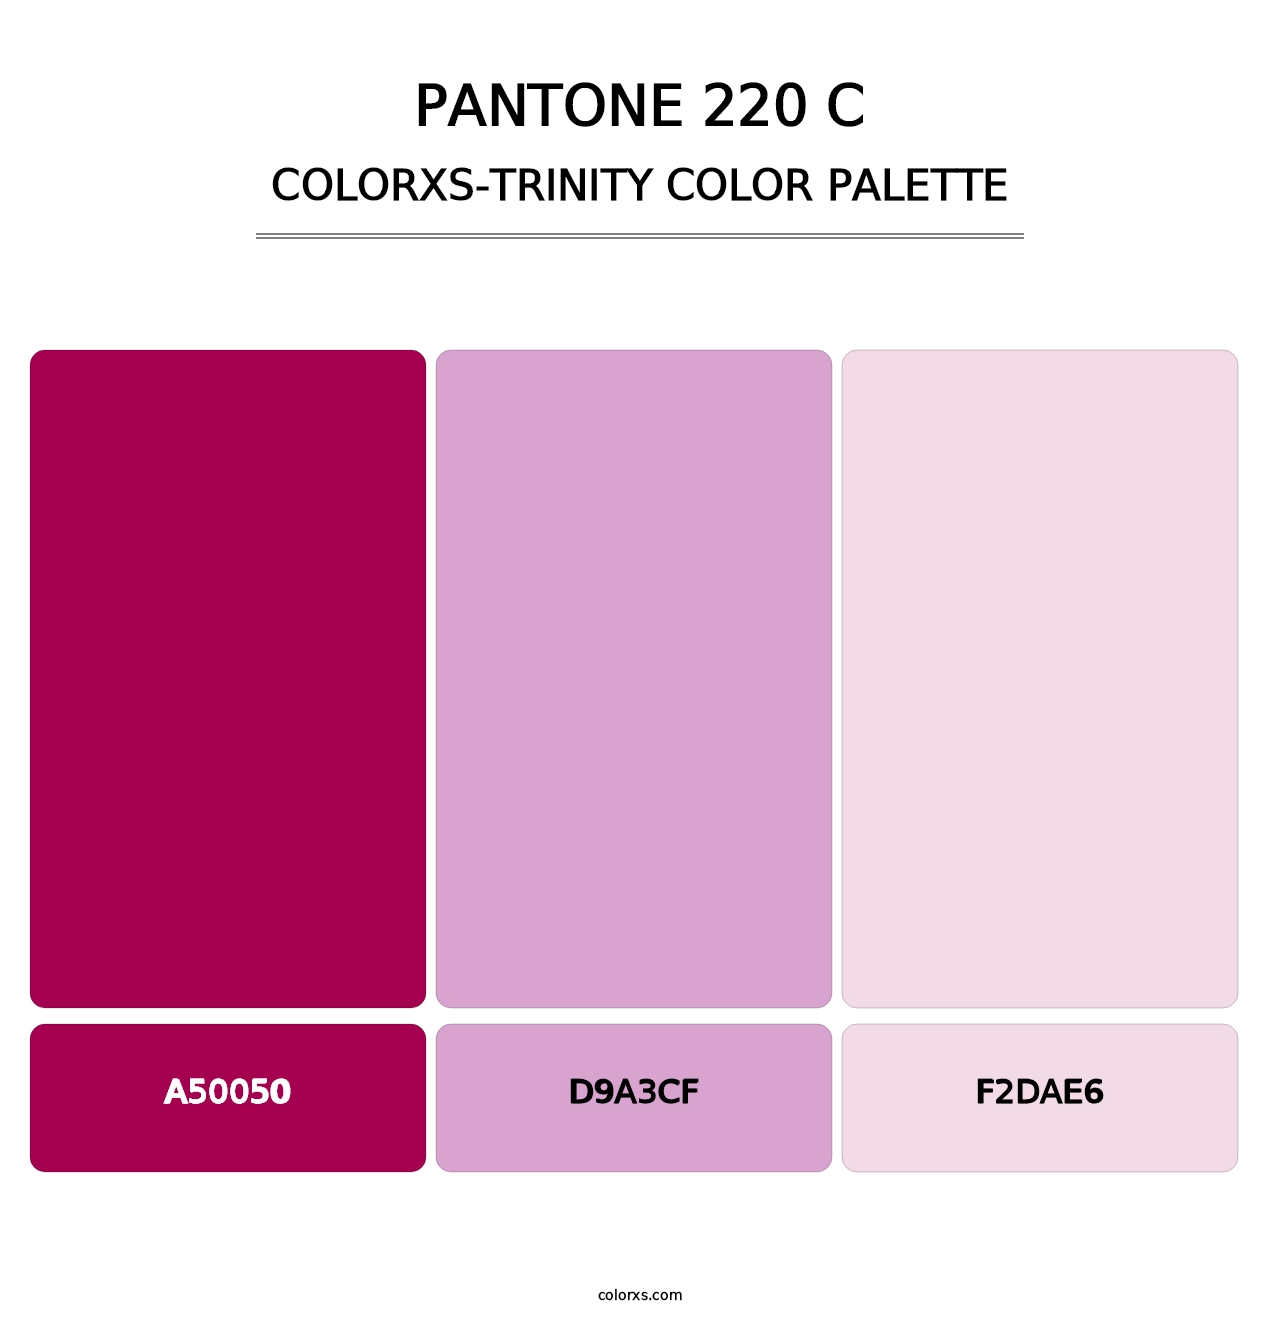 PANTONE 220 C - Colorxs Trinity Palette